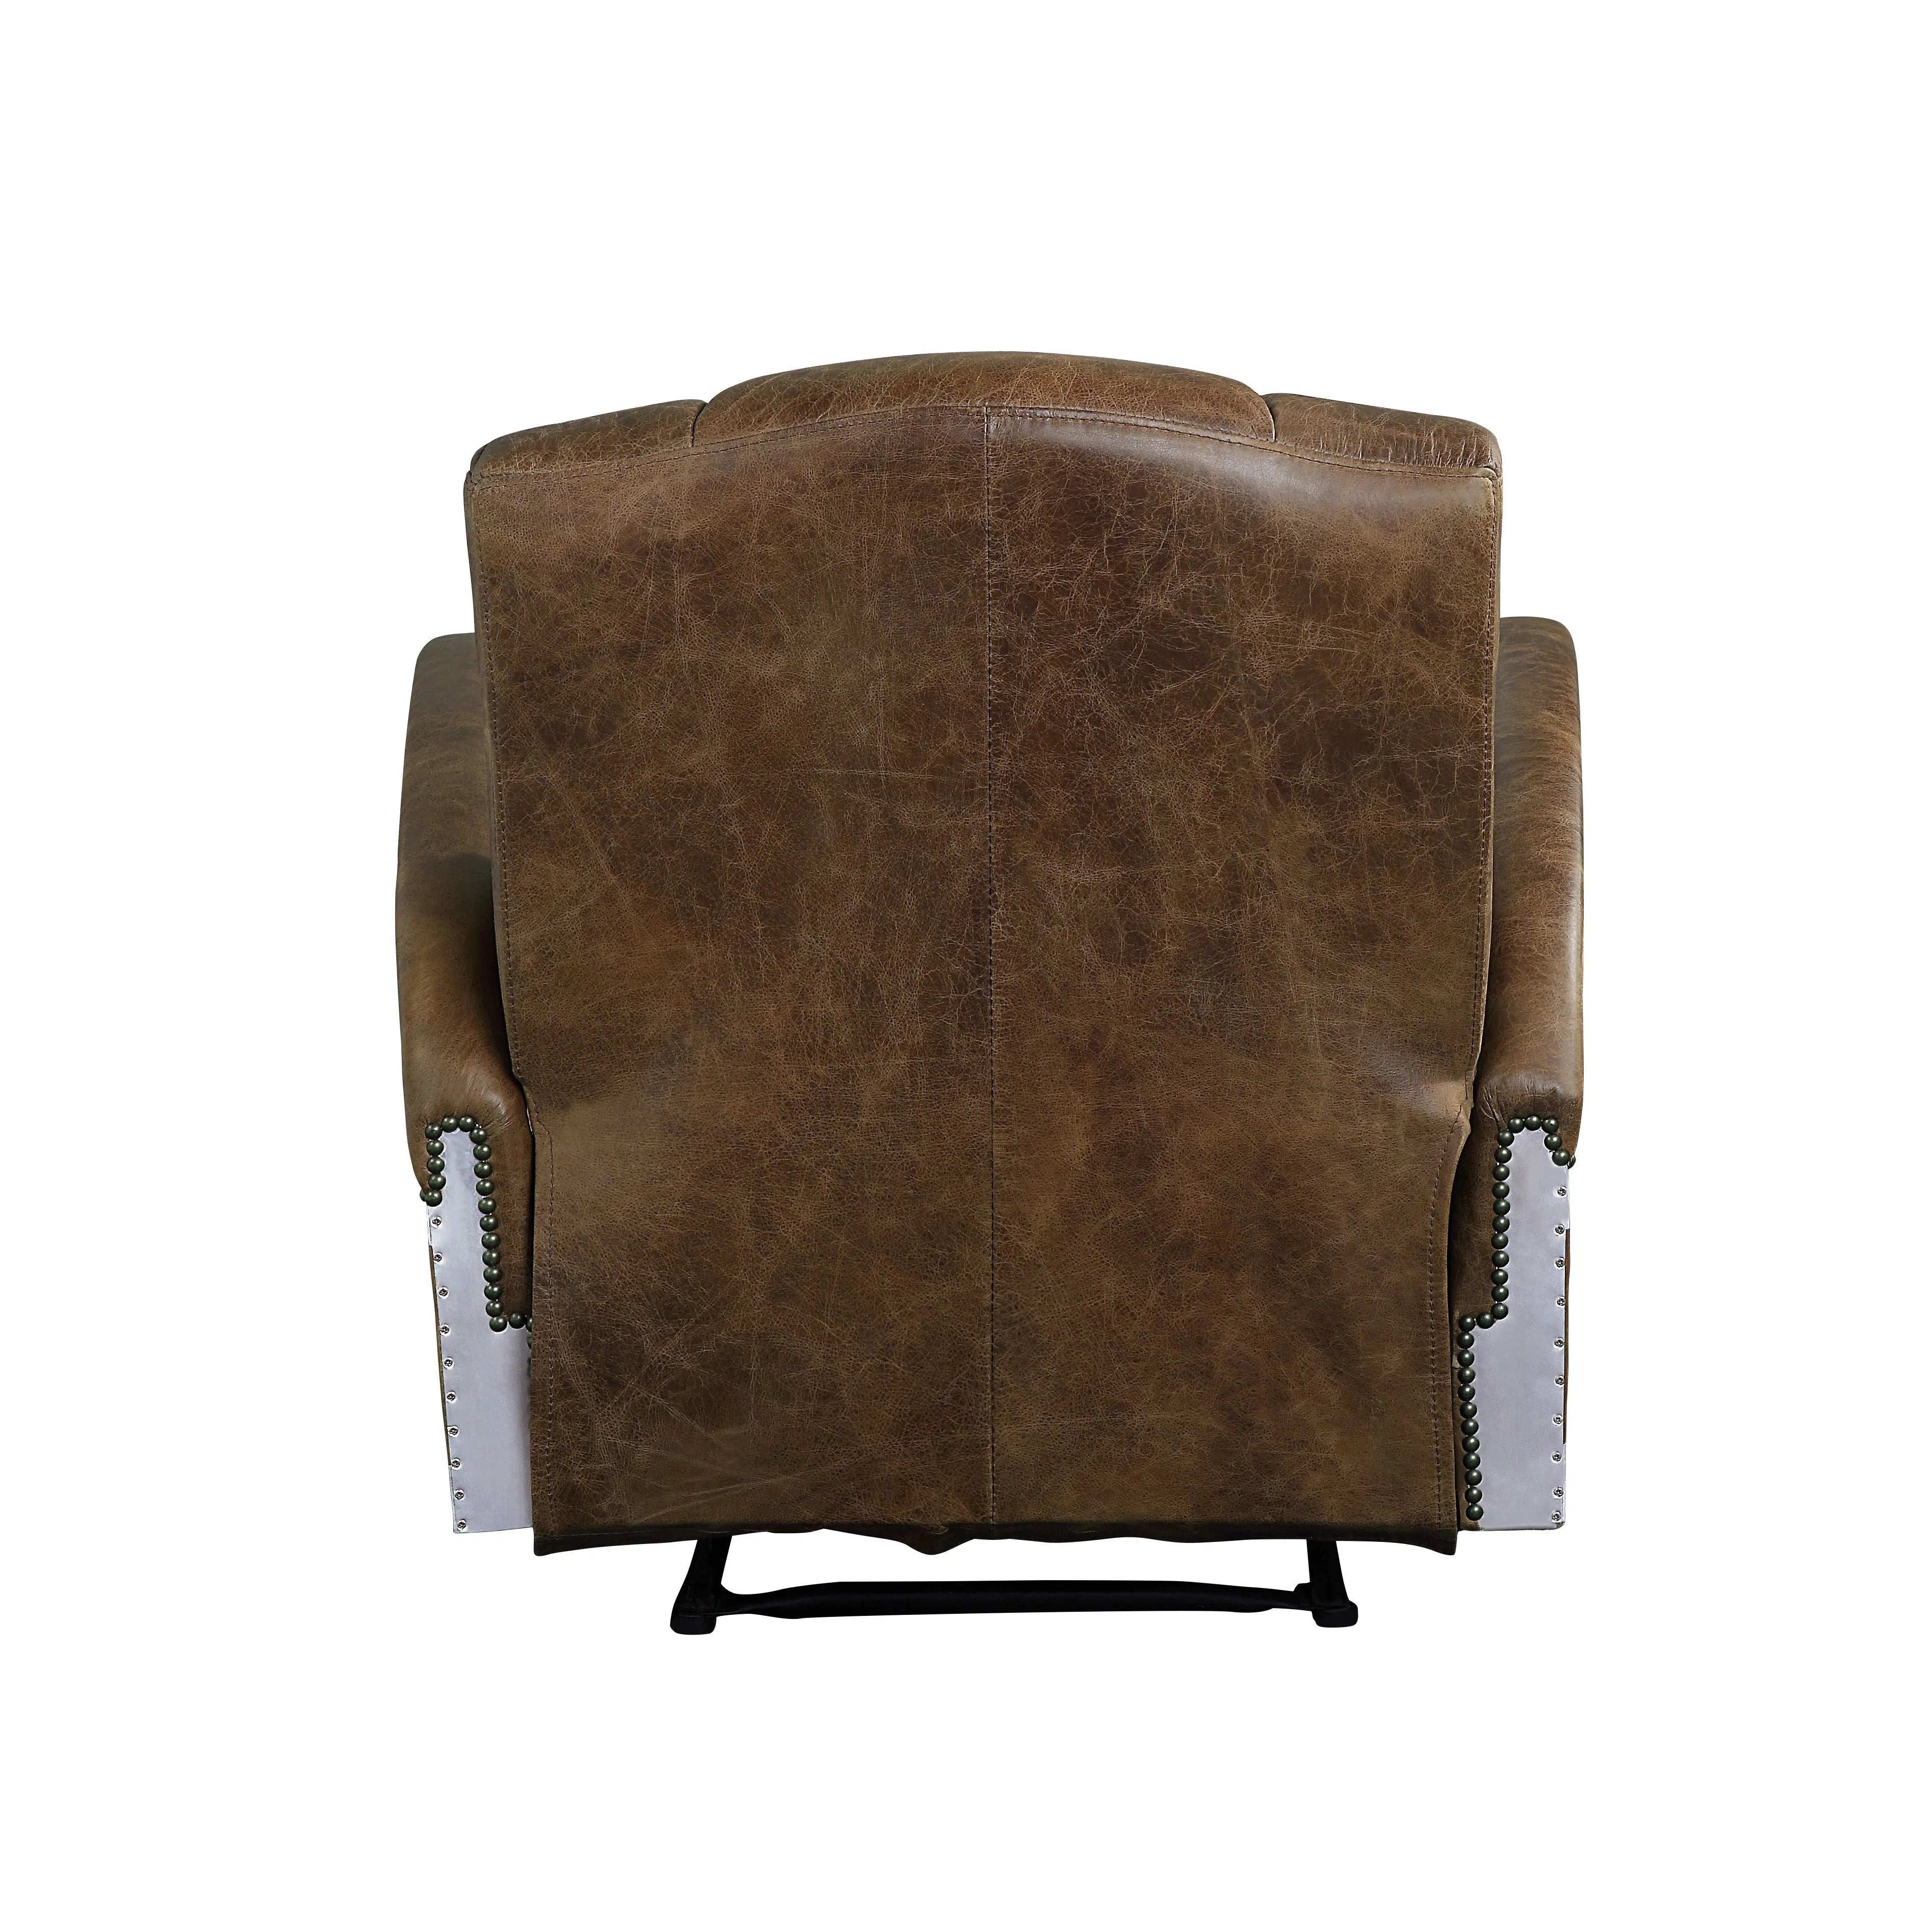 Brancaster Retro Brown Top Grain Leather & Aluminum Recliner Model 59718 By ACME Furniture